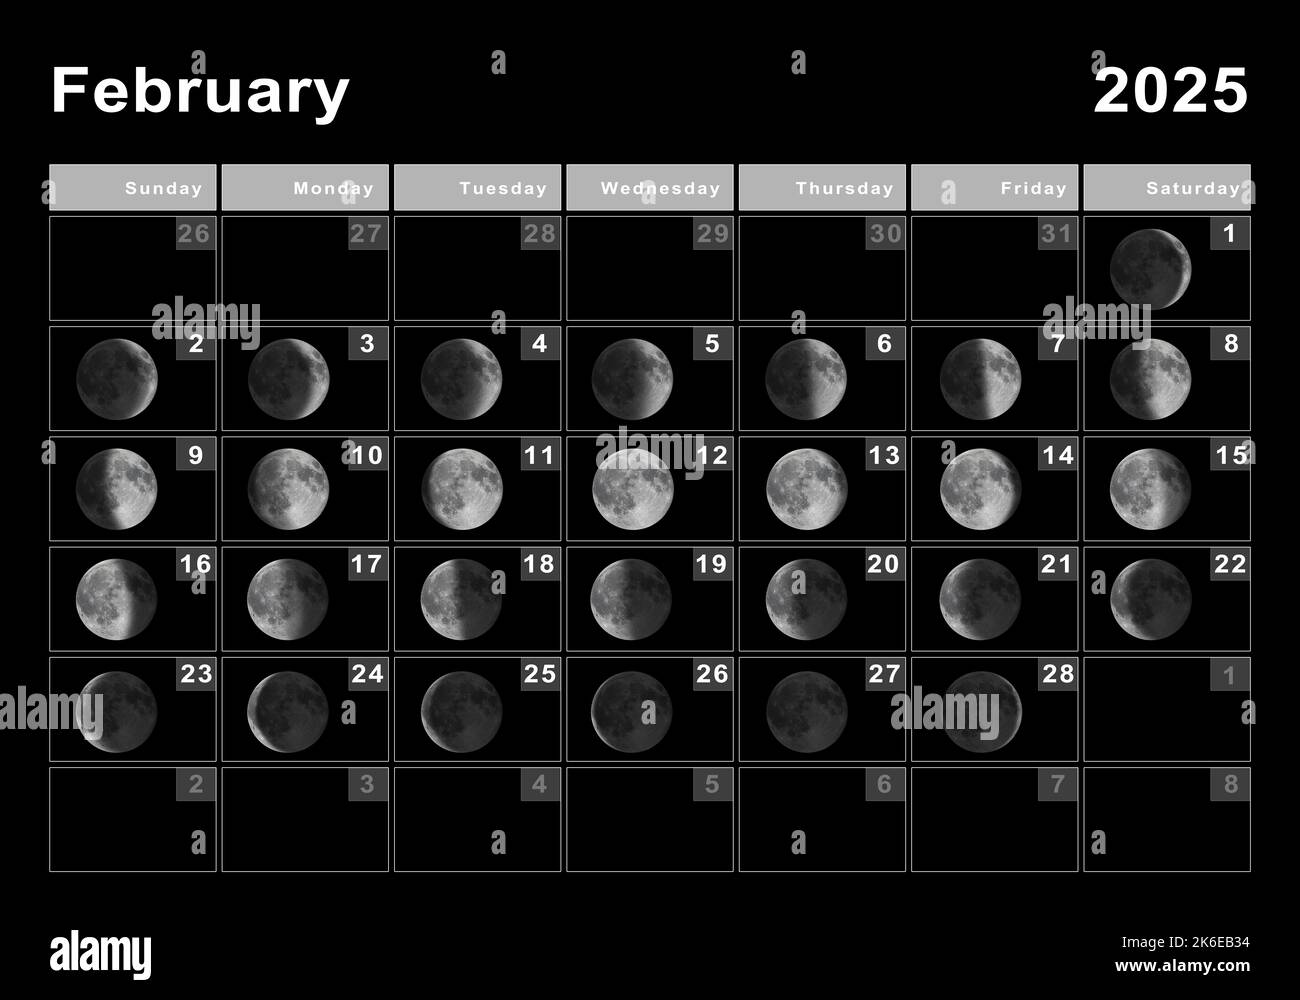 february-2025-lunar-calendar-moon-cycles-moon-phases-stock-photo-alamy